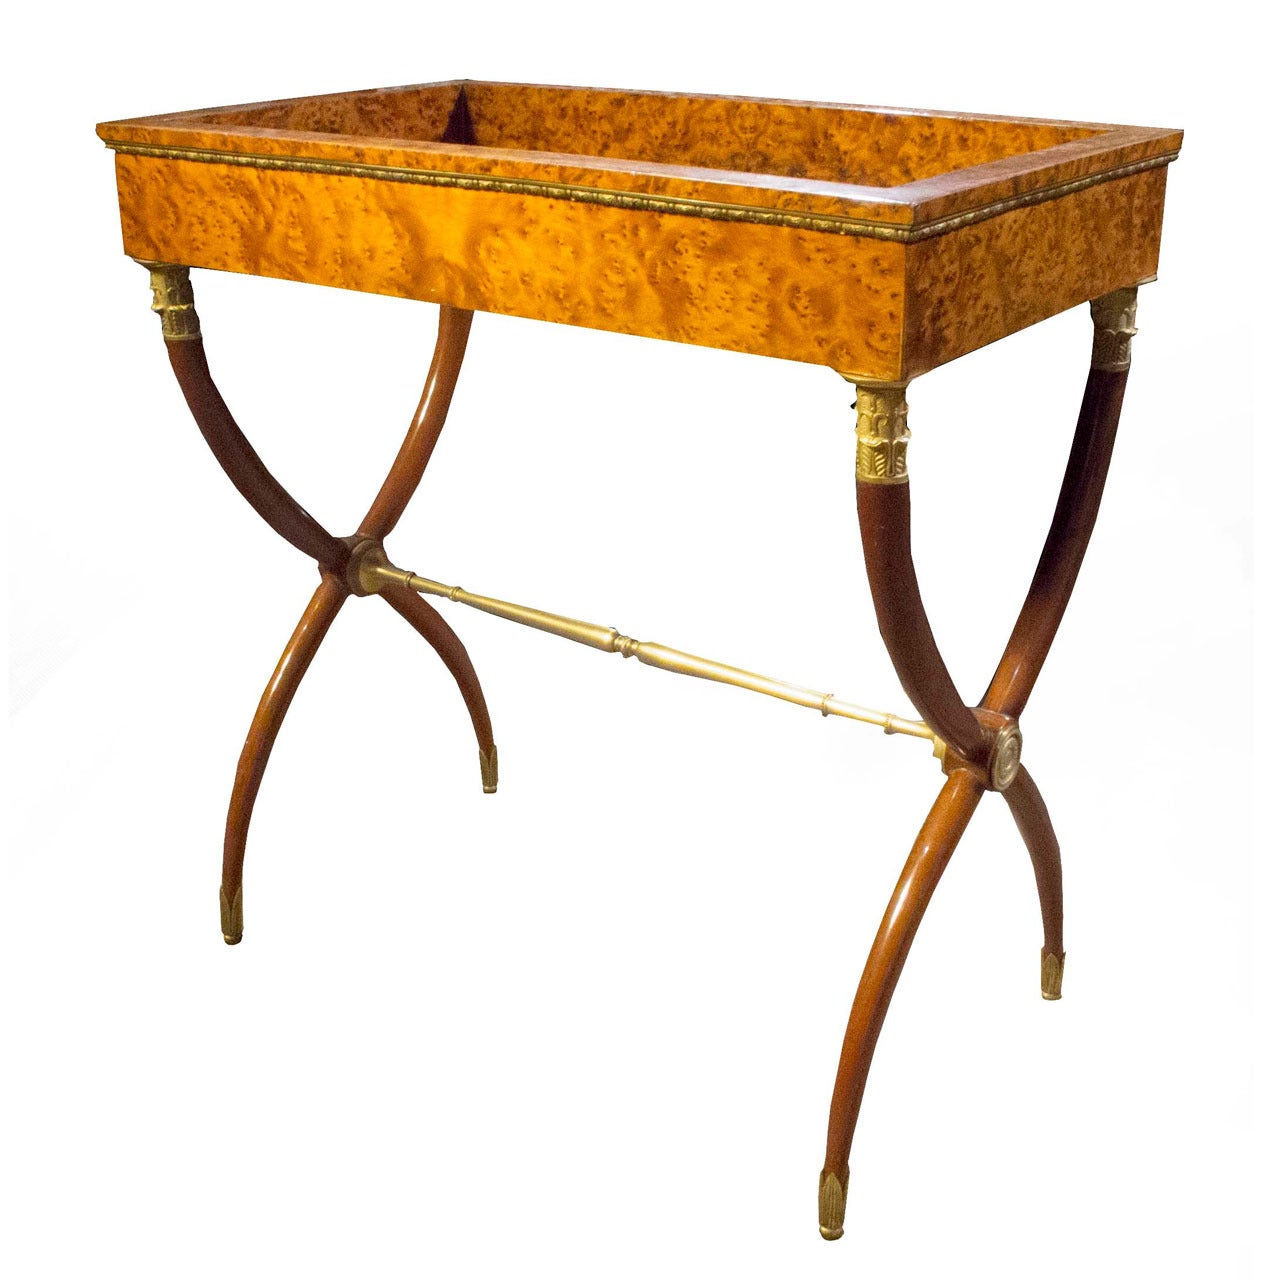 Empire Burl Wood Tray Table circa 1810